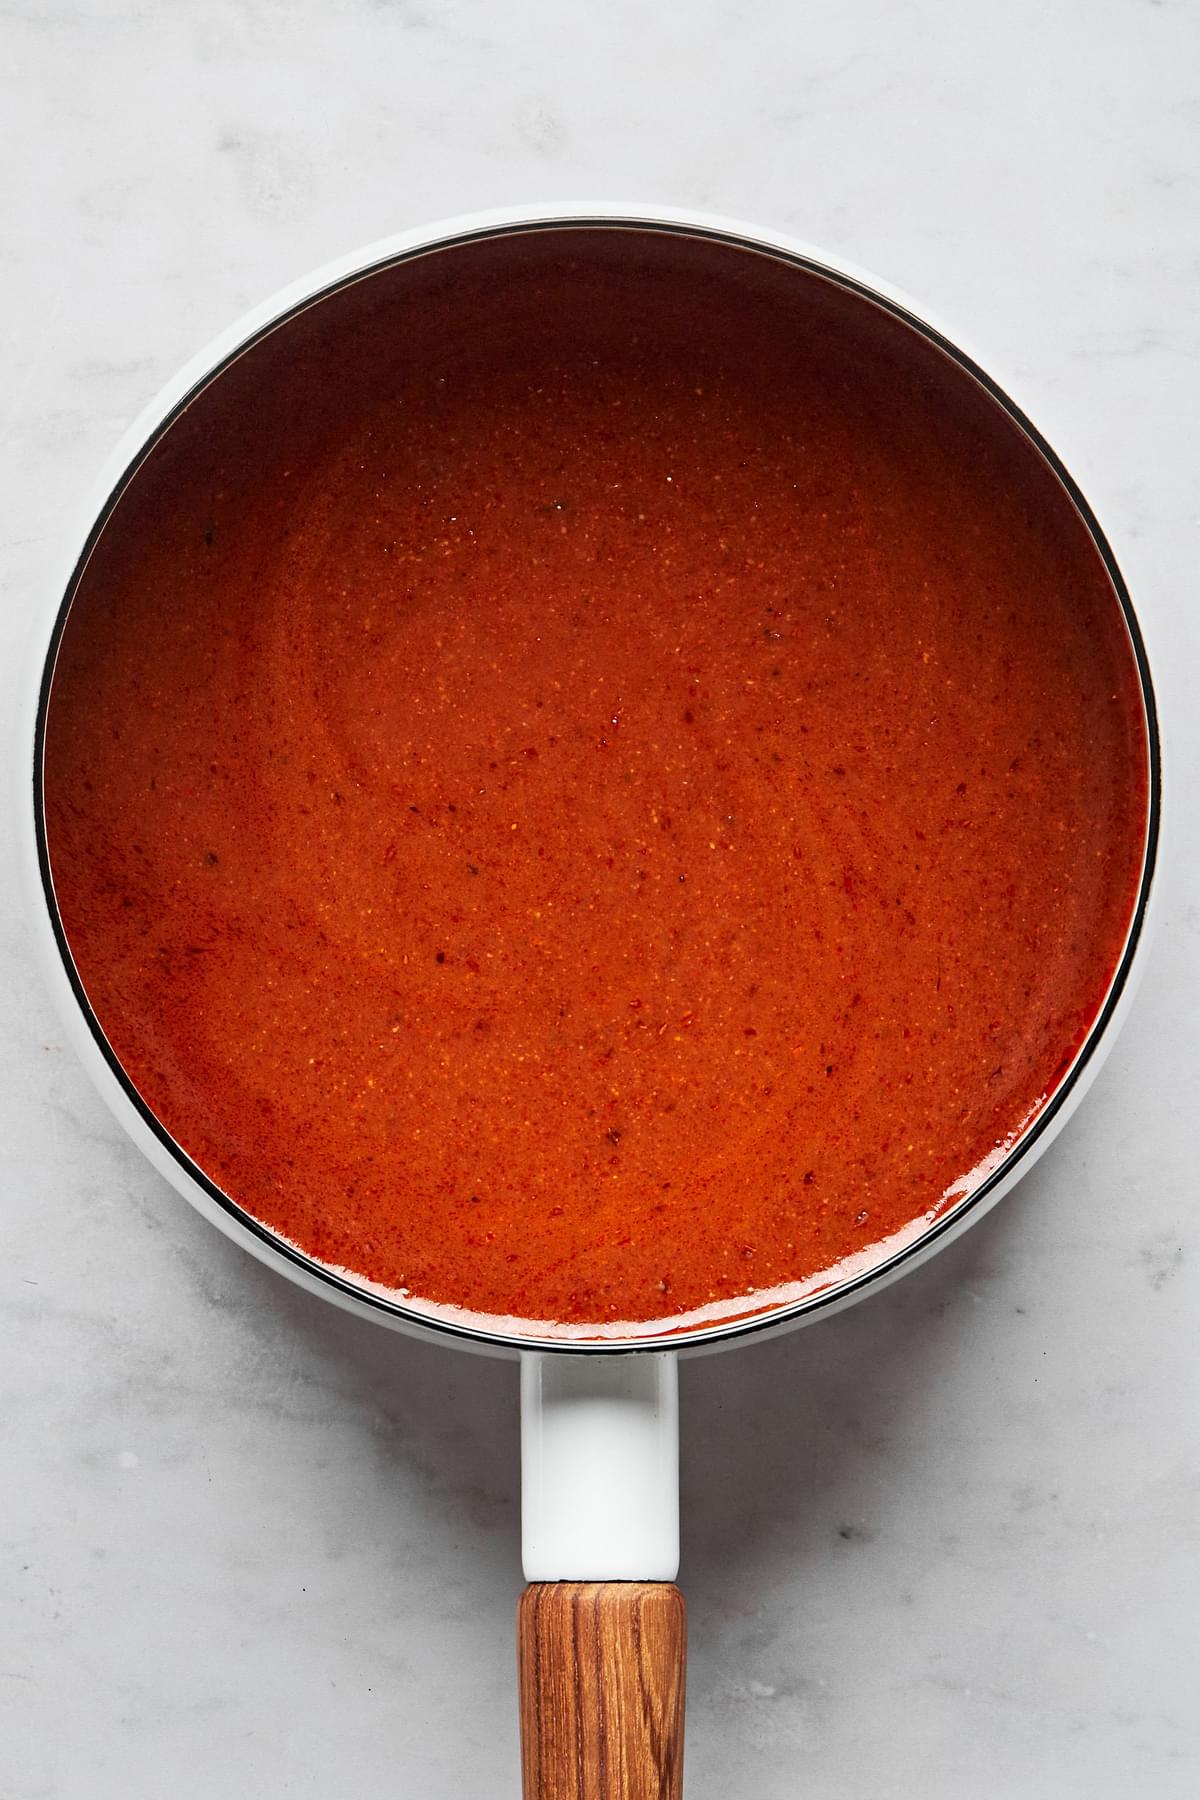 homemade enchilada sauce in a pot spiced with chili powder, garlic powder, onion powder, cumin, oregano, and tomato paste